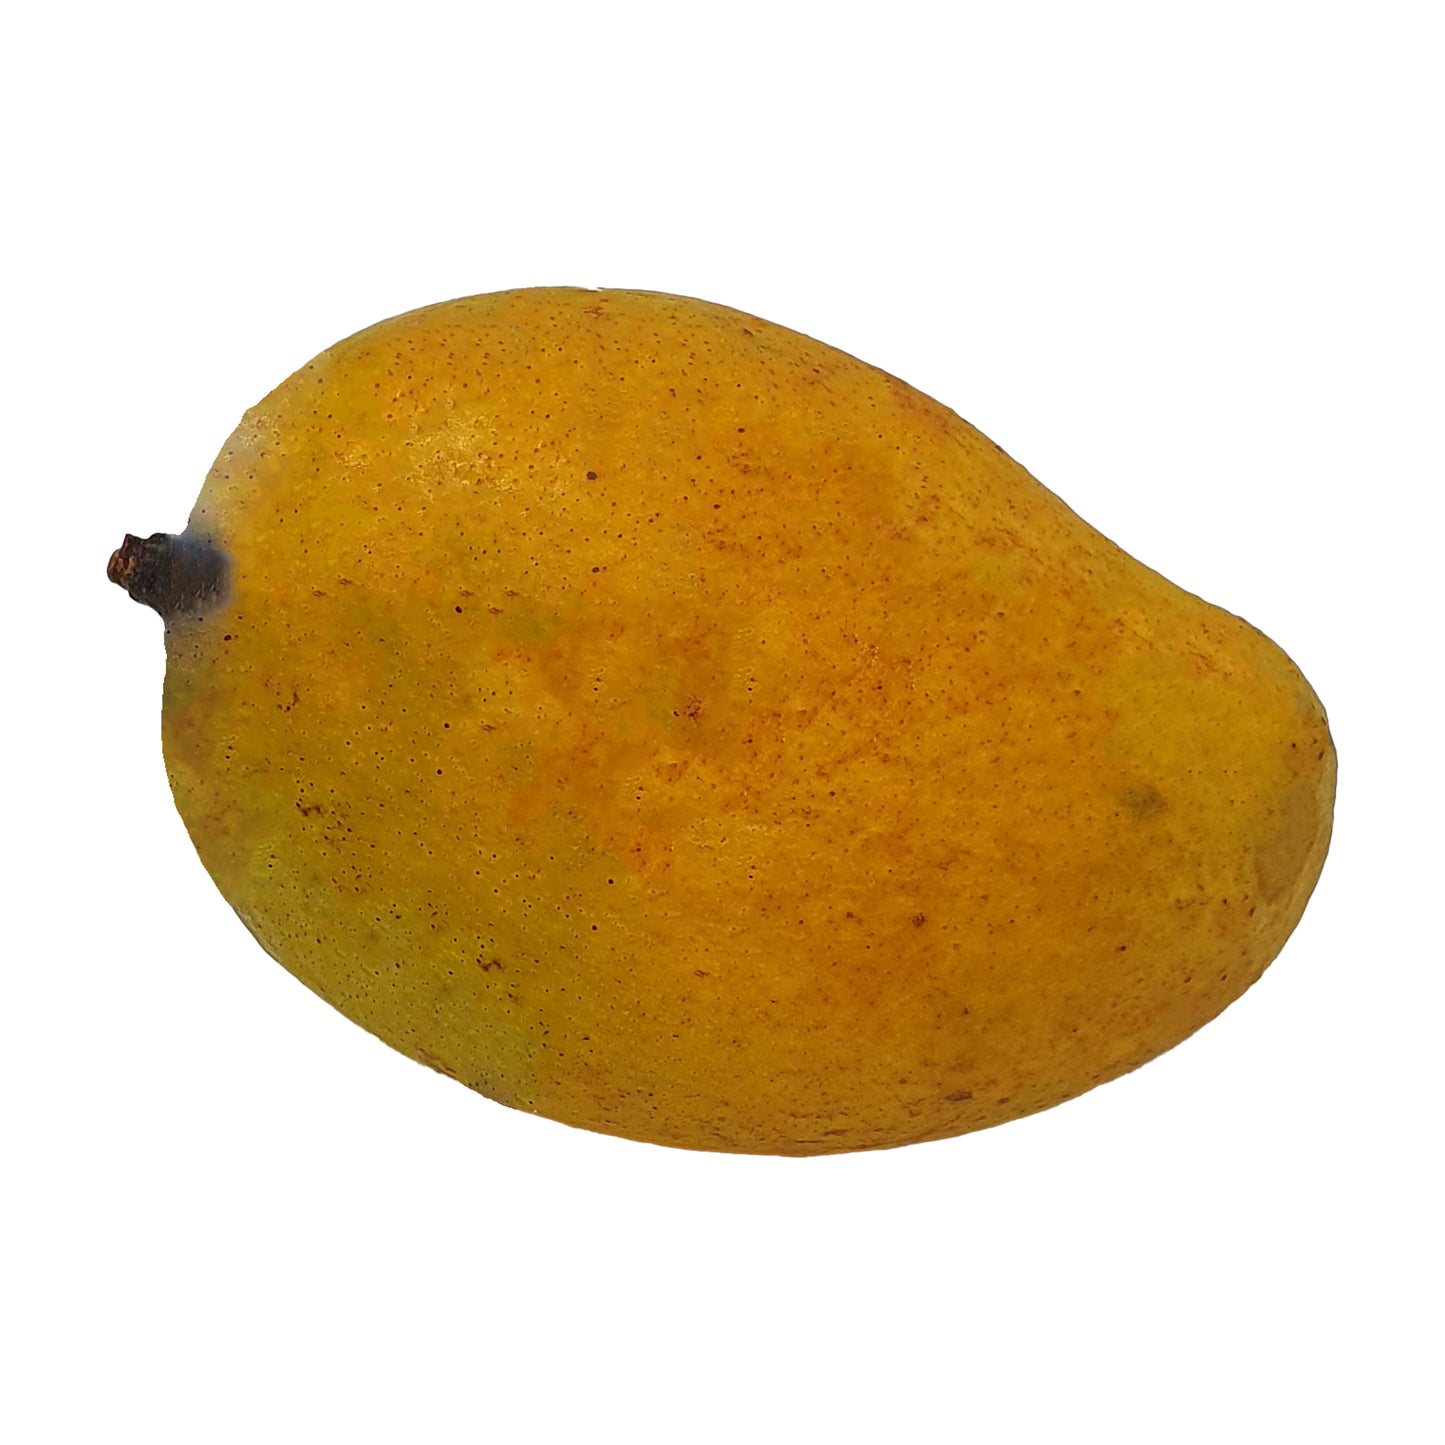 Alphonso Mango (1kg)